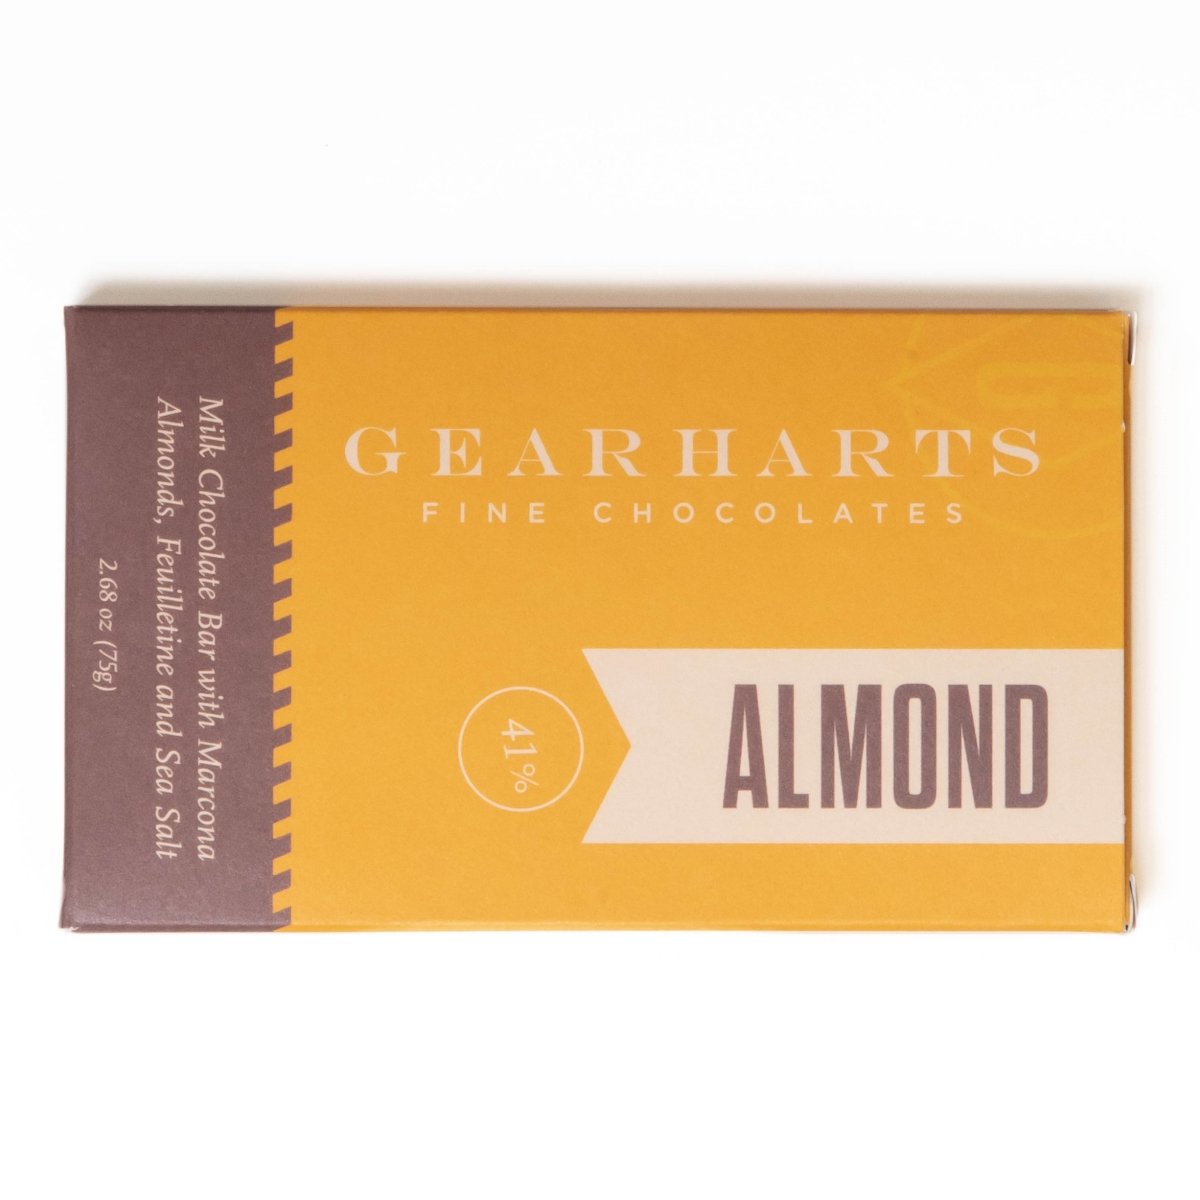 Handmade Chocolate Bar- Almond Bar- Gearharts Fine Chocolates